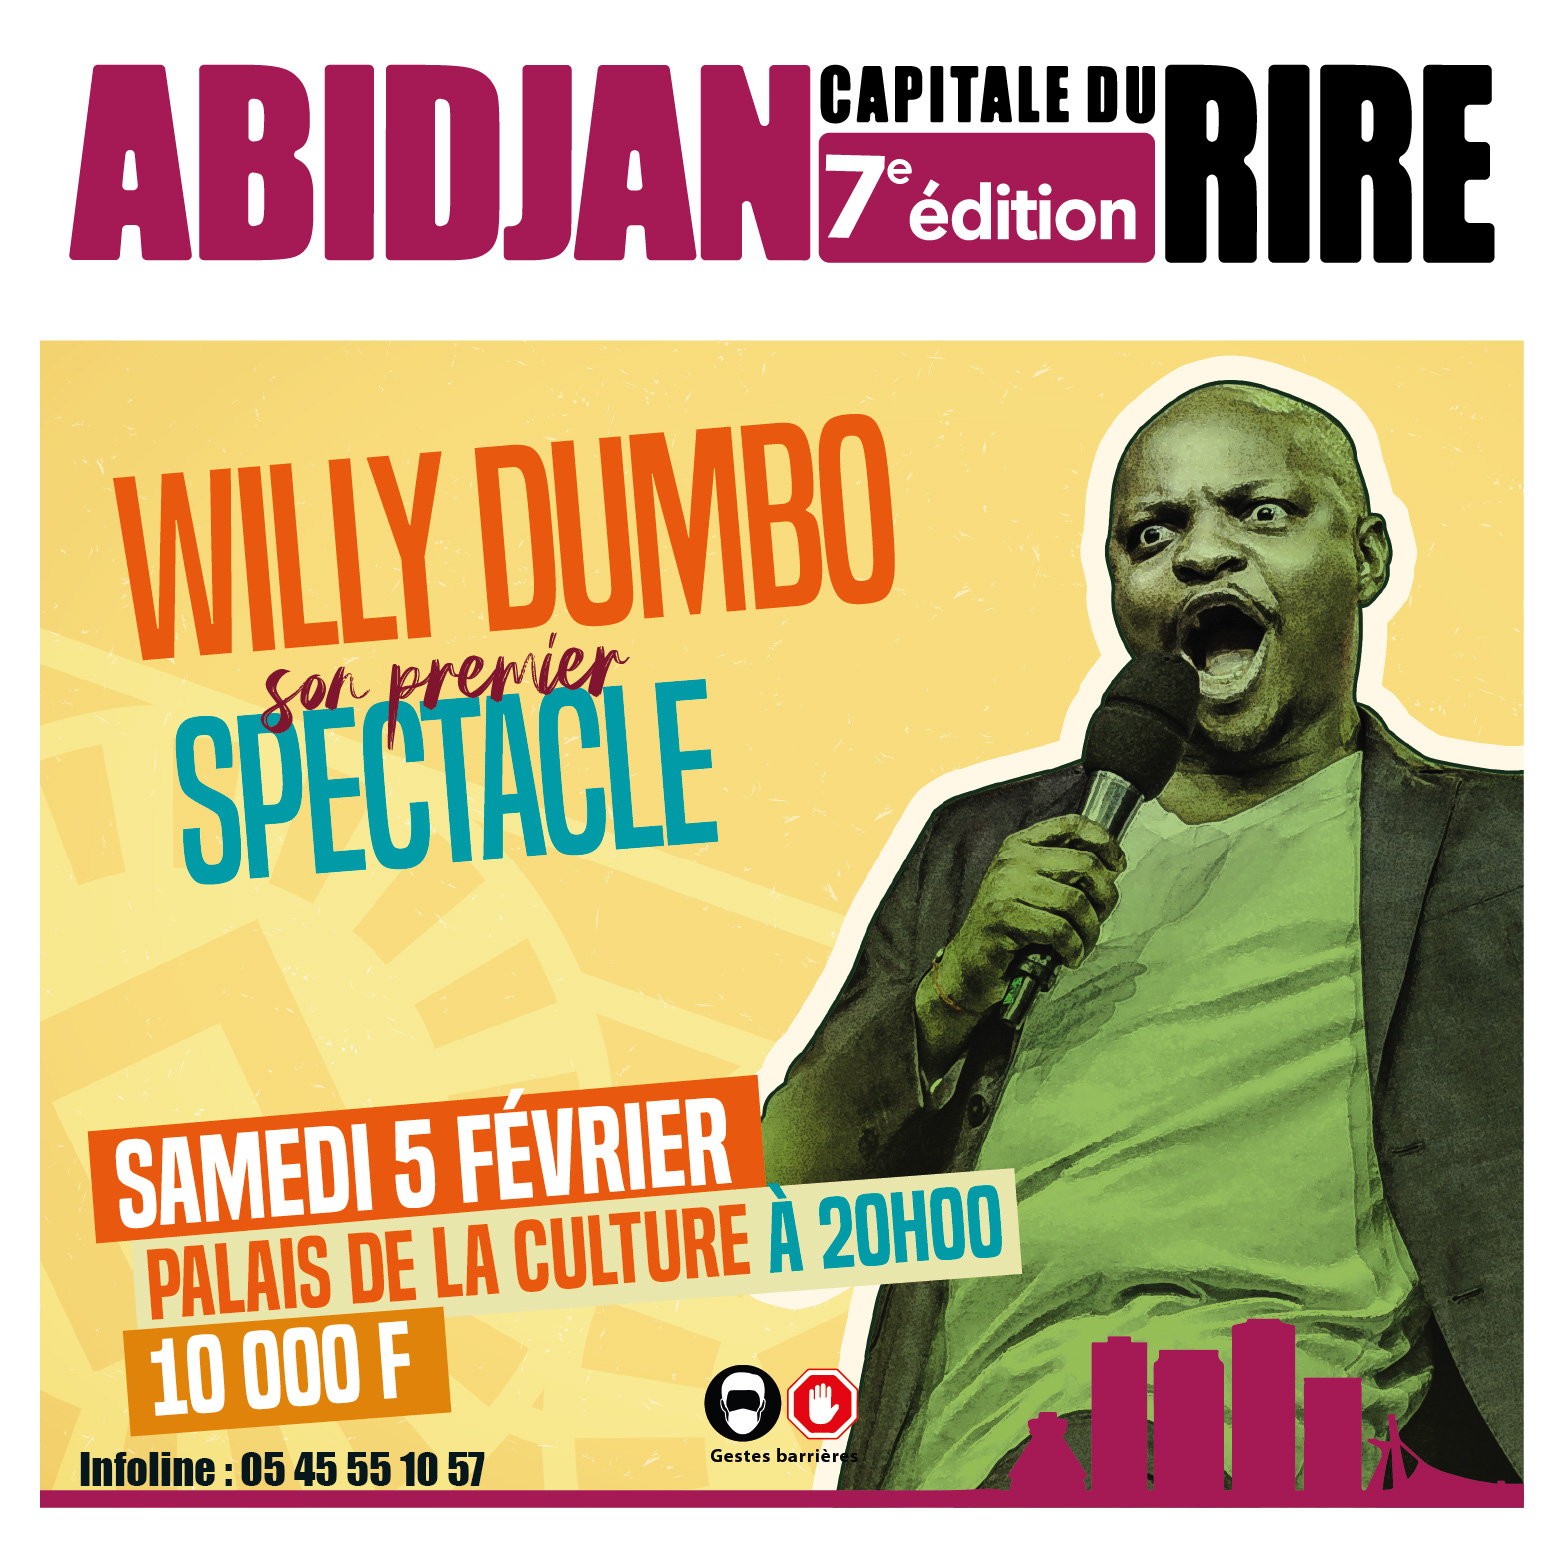 7e Edition Abidjan capital du rire : Willy dans son premier spectacle